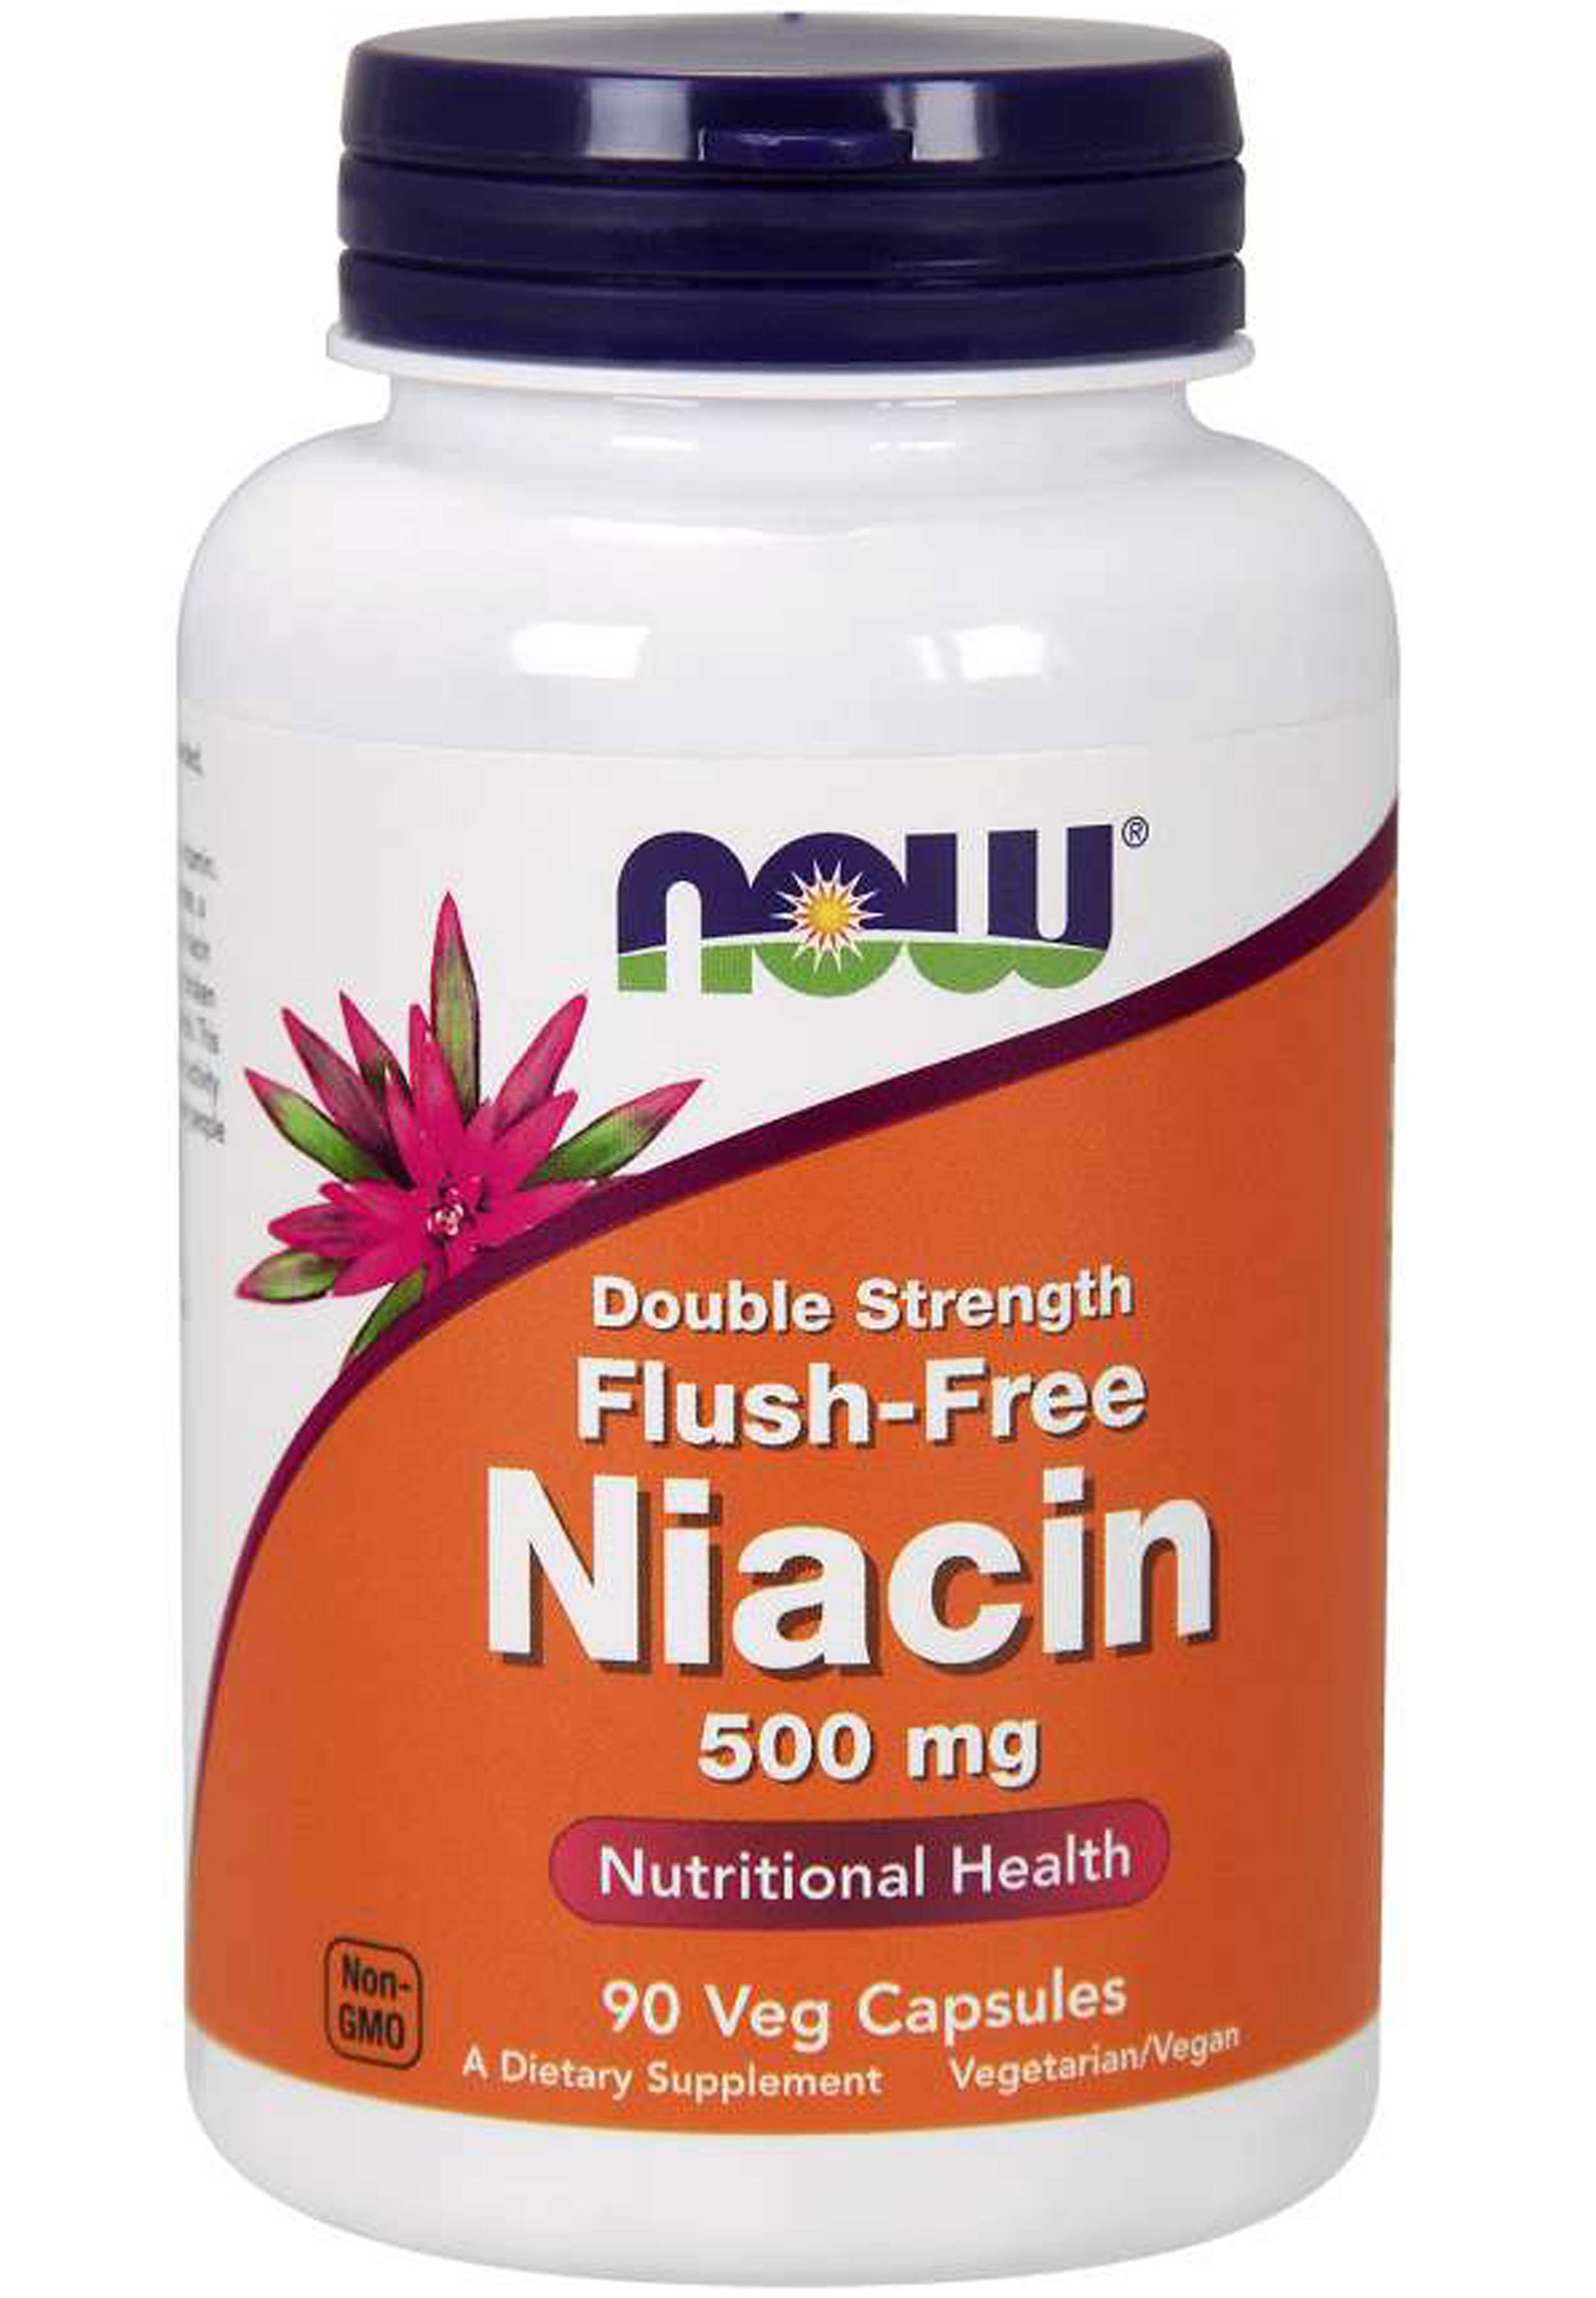 NOW Double Strength Flush-Free Niacin 500 mg